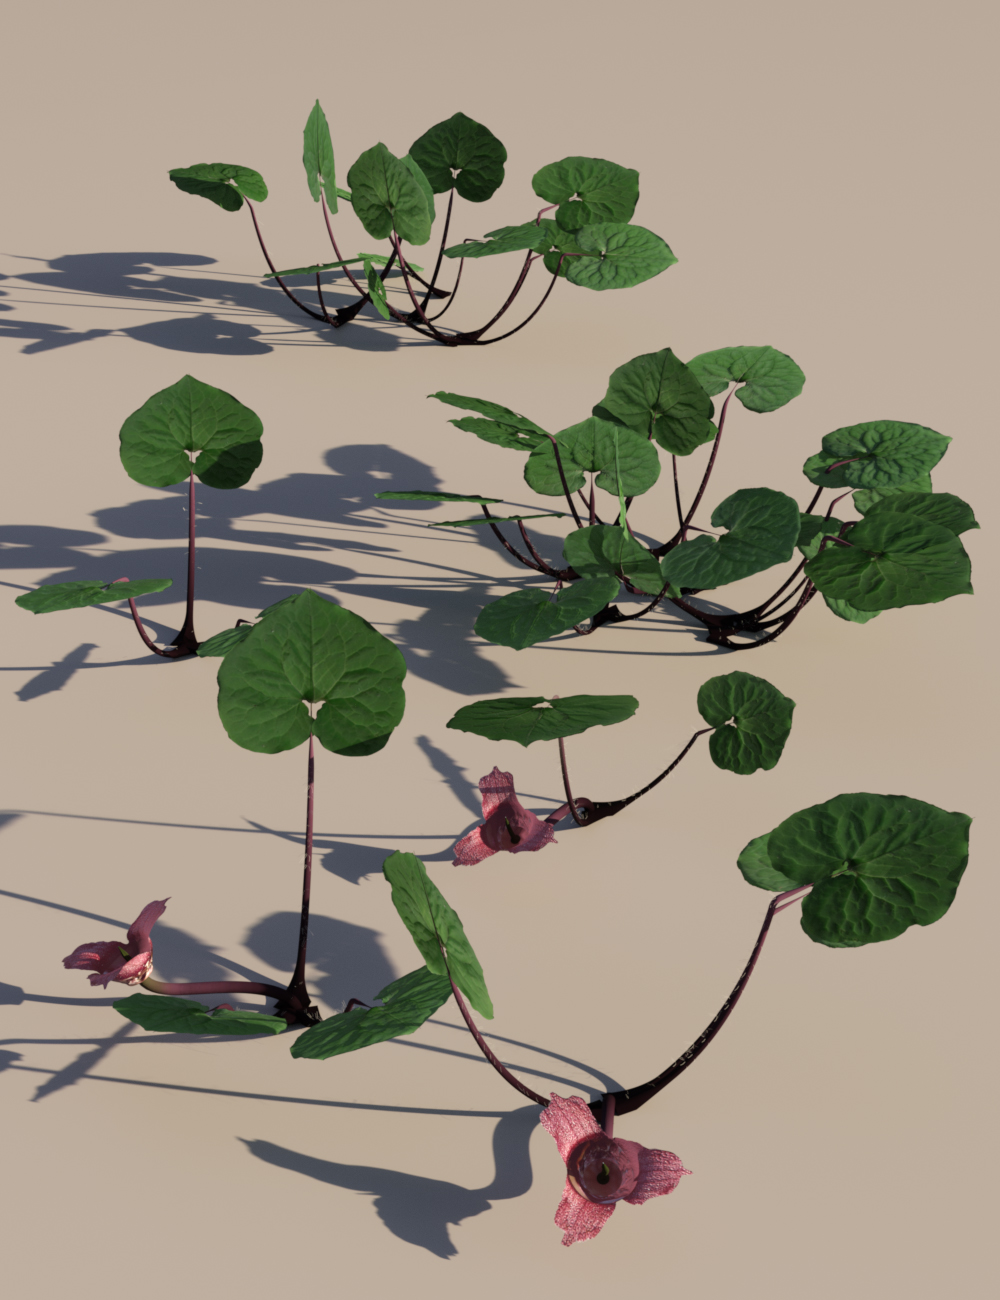 Wild Flower Plants Vol 7 - Woodland by: MartinJFrost, 3D Models by Daz 3D